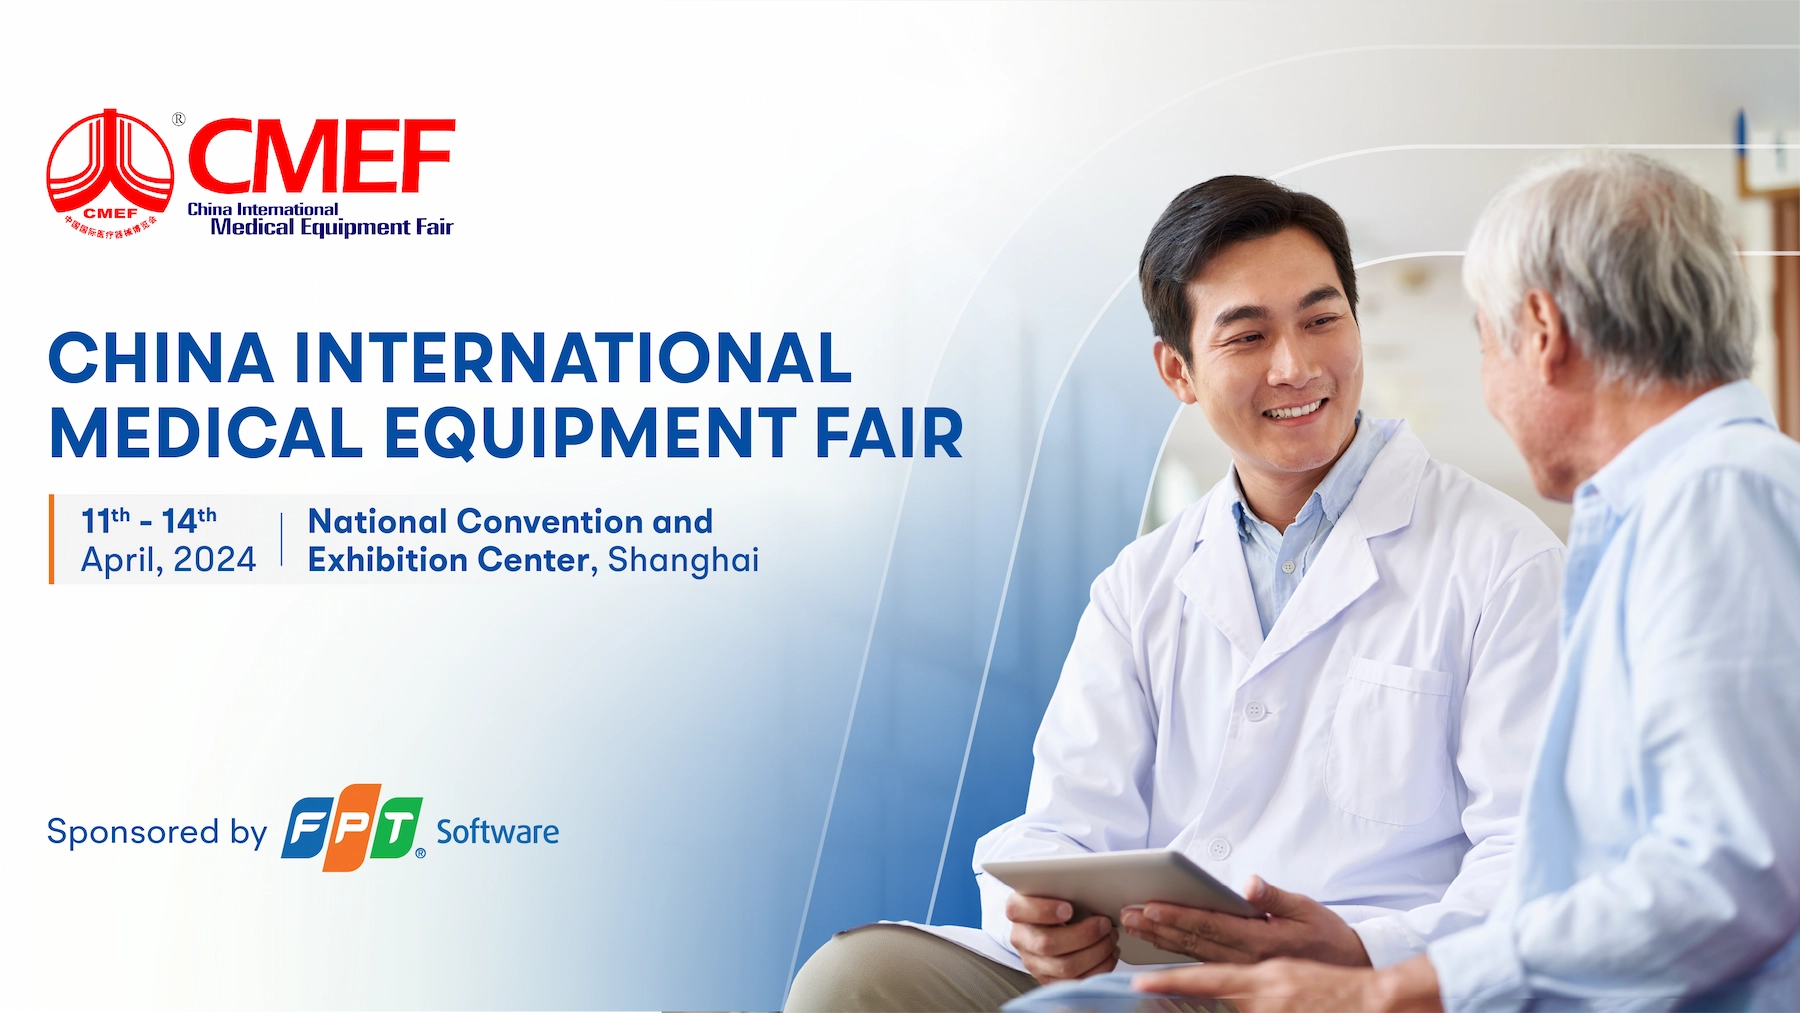 China International Medical Equiqment Fair